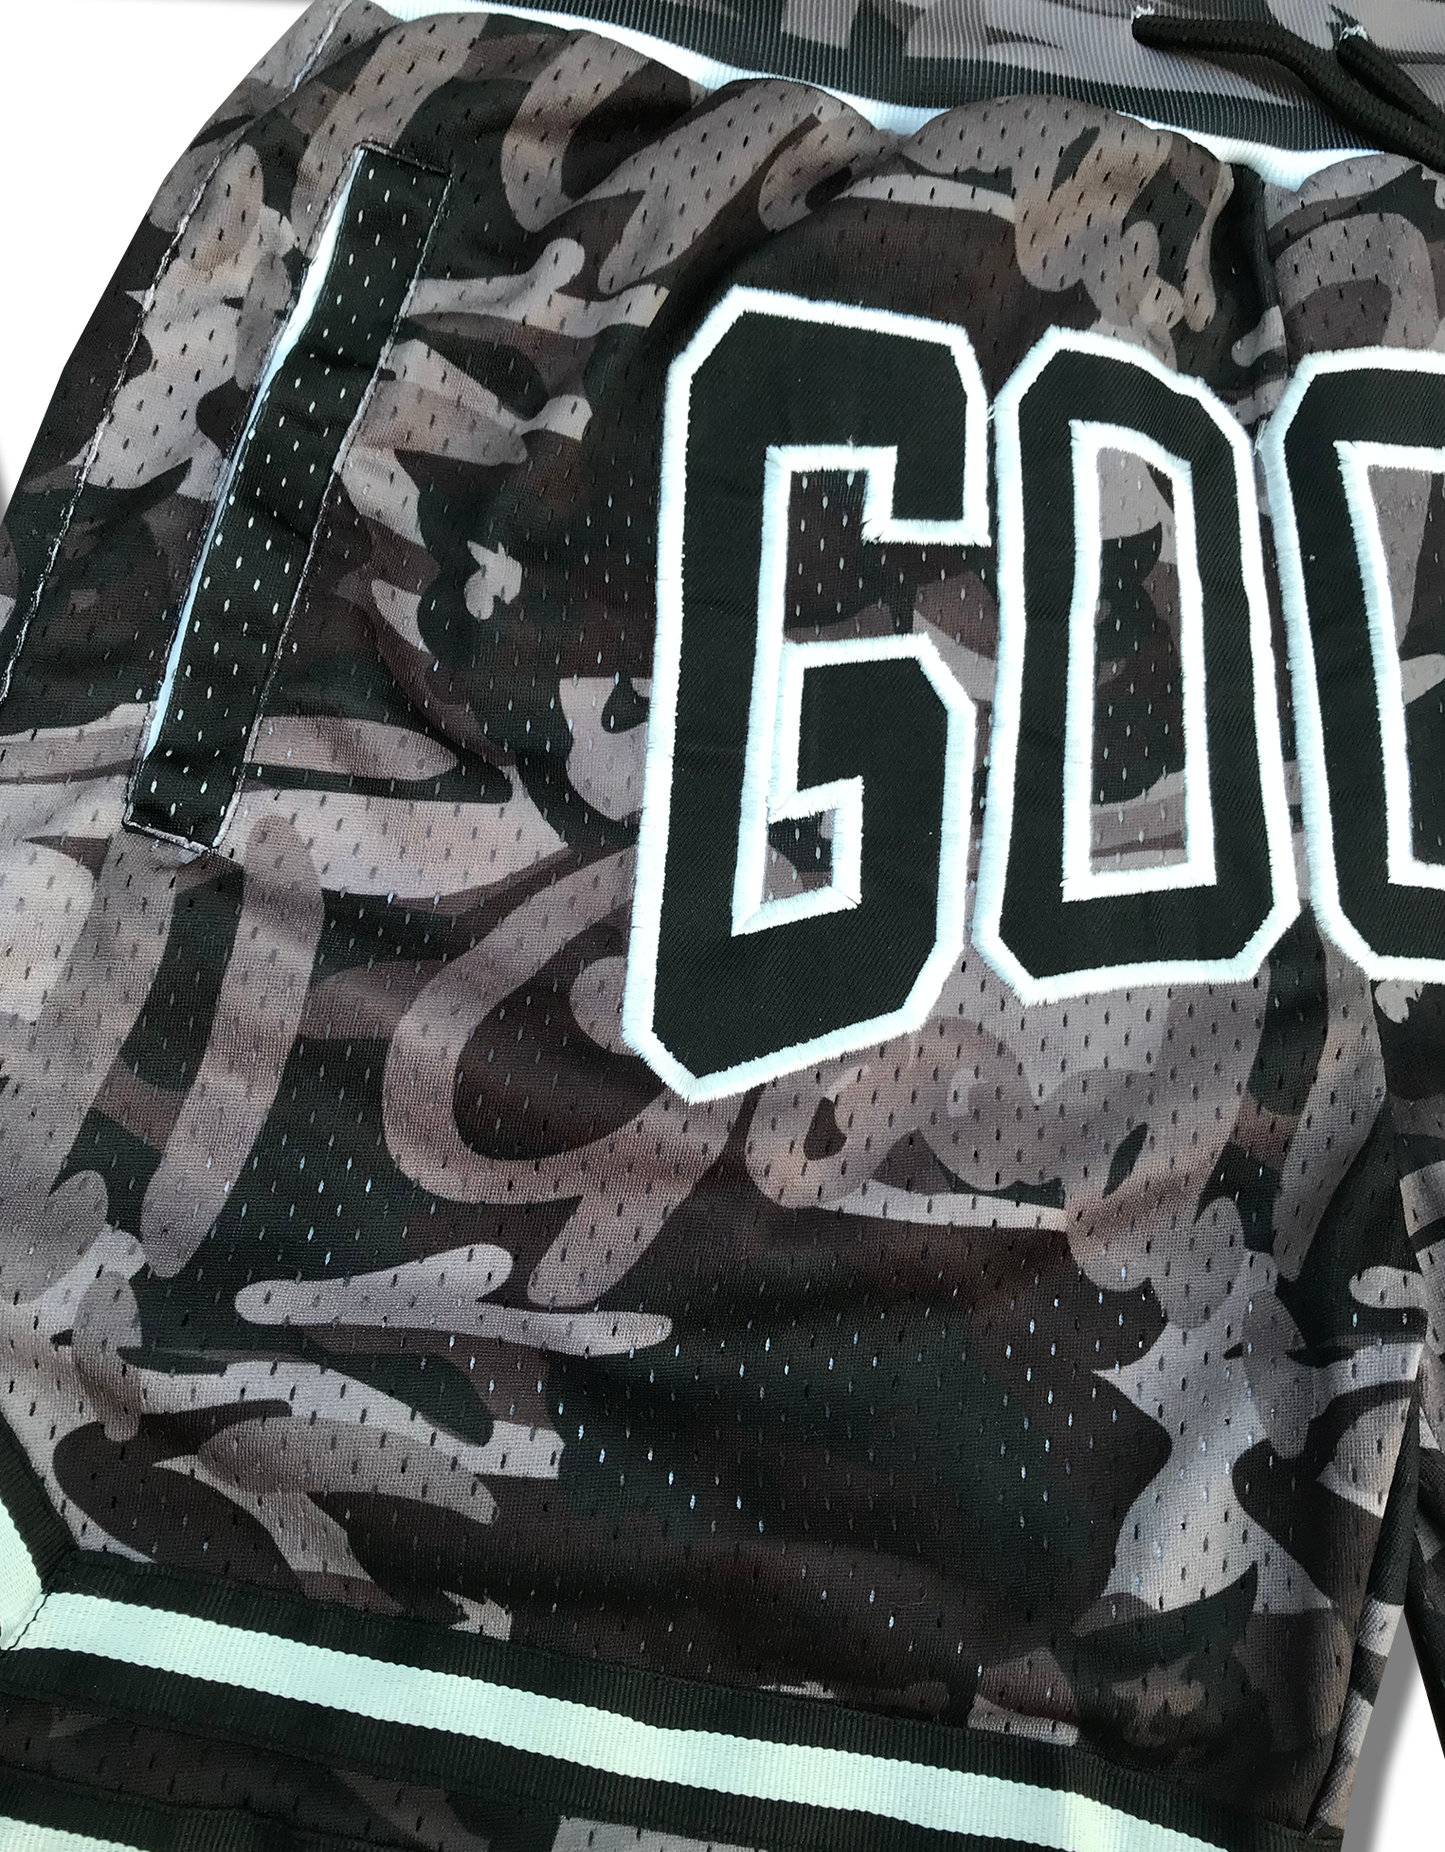 The Goods Clo - Basketball Shorts (BLACK)